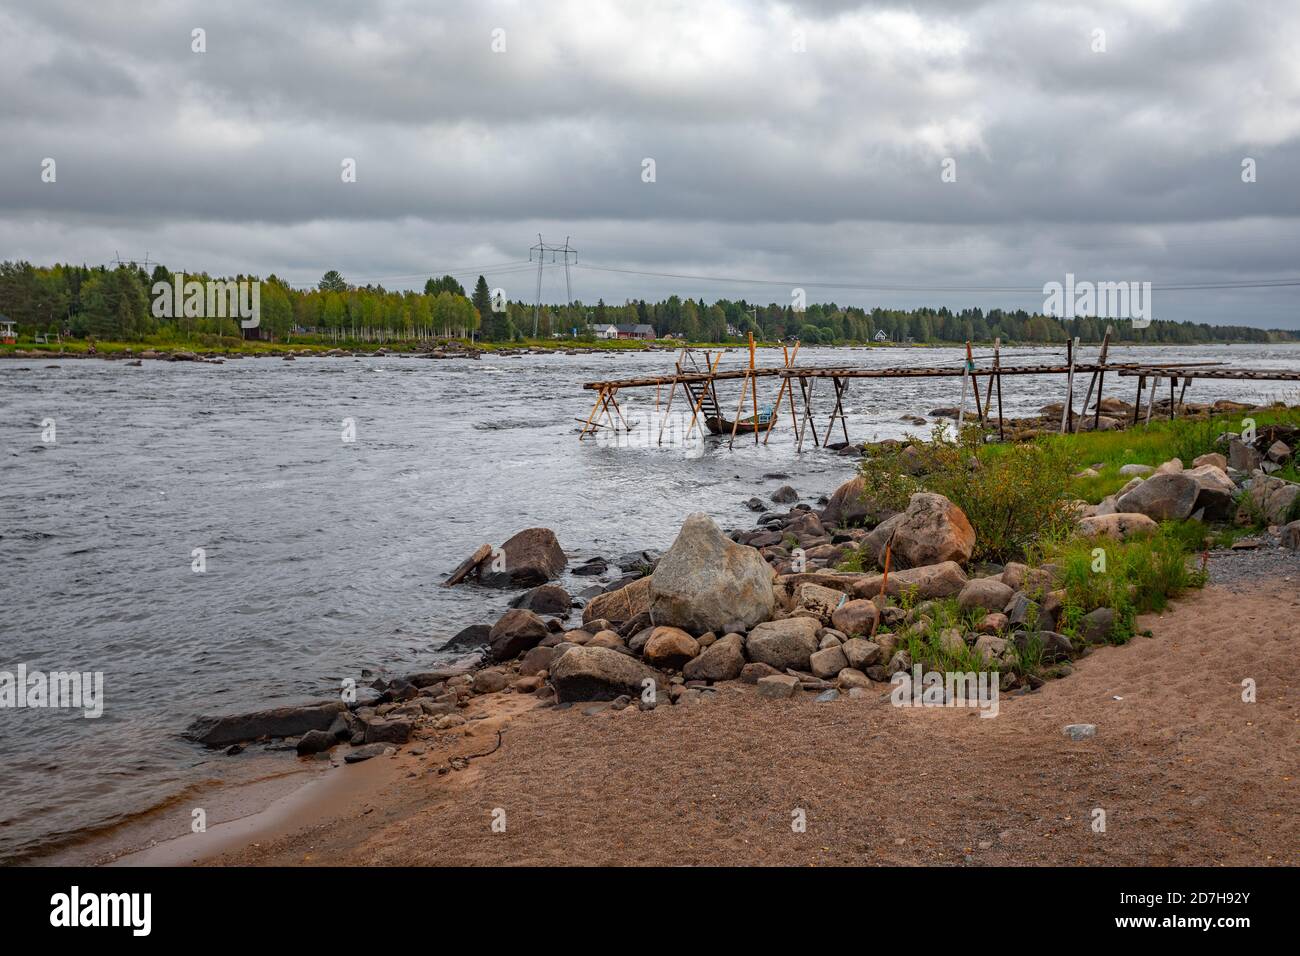 Torne river near Kukkolaforsens parkeringsplats in Sweden Stock Photo